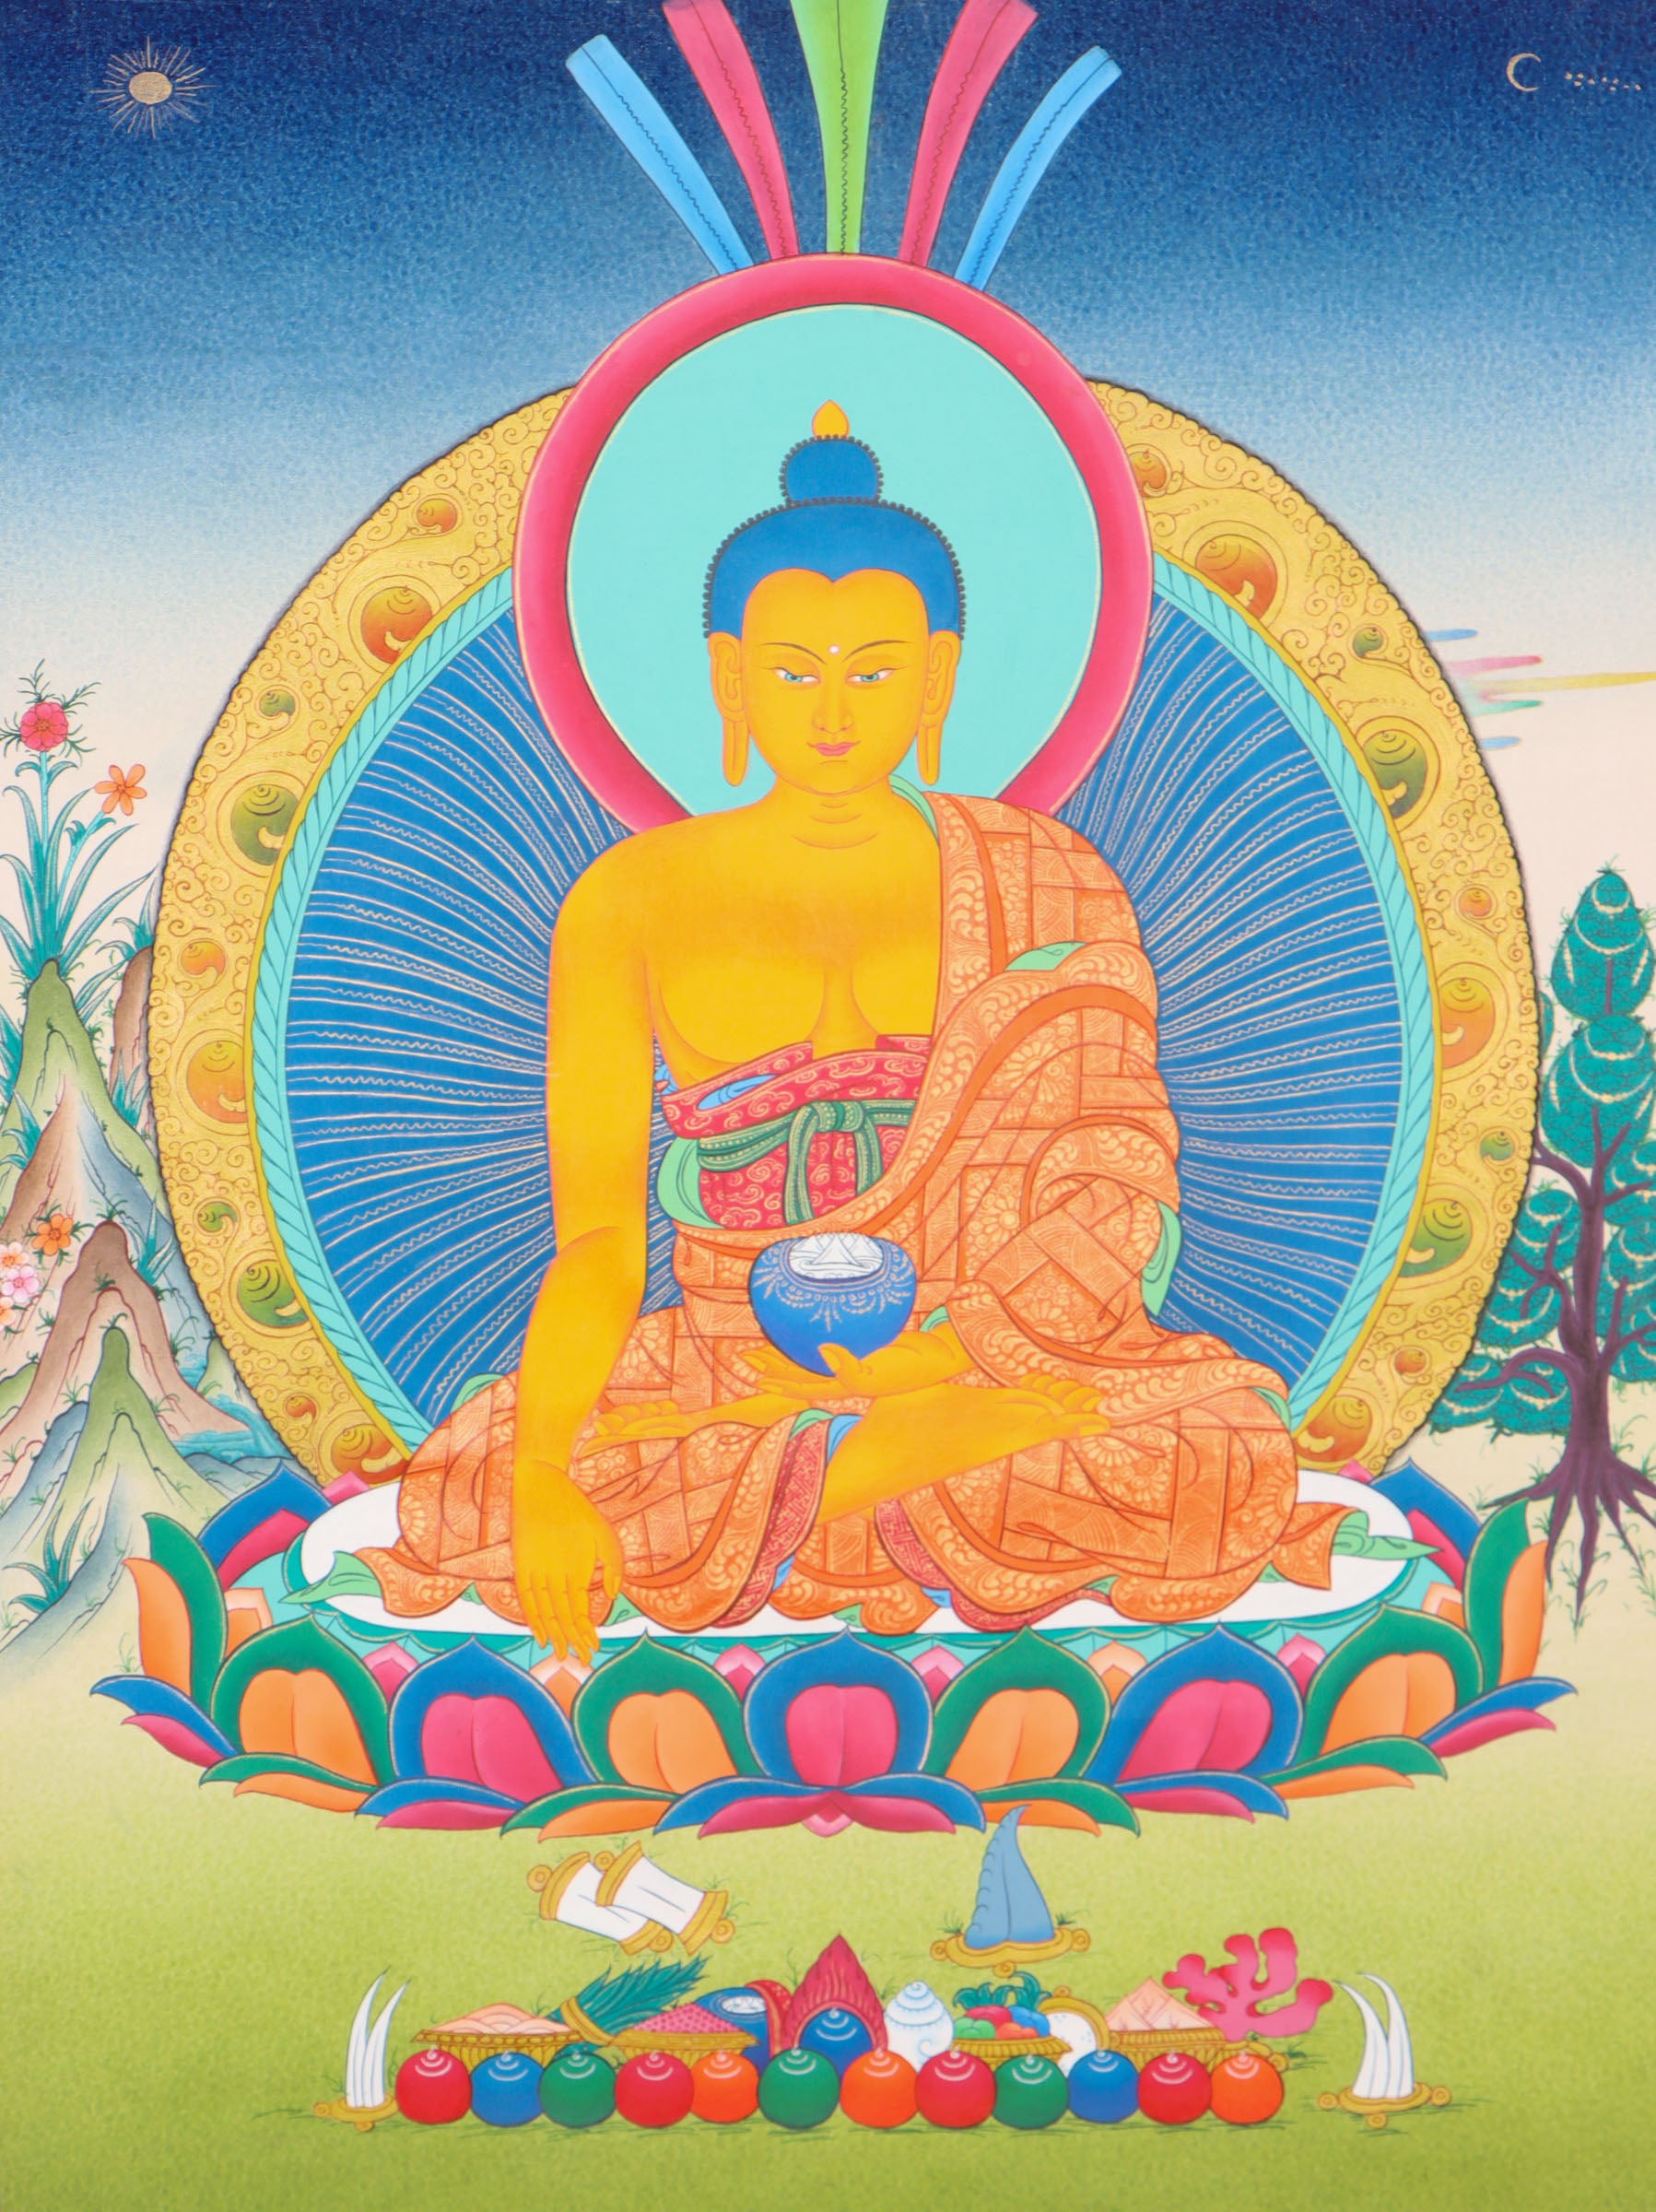 Shakyamuni Buddha Thangka for spirituality.